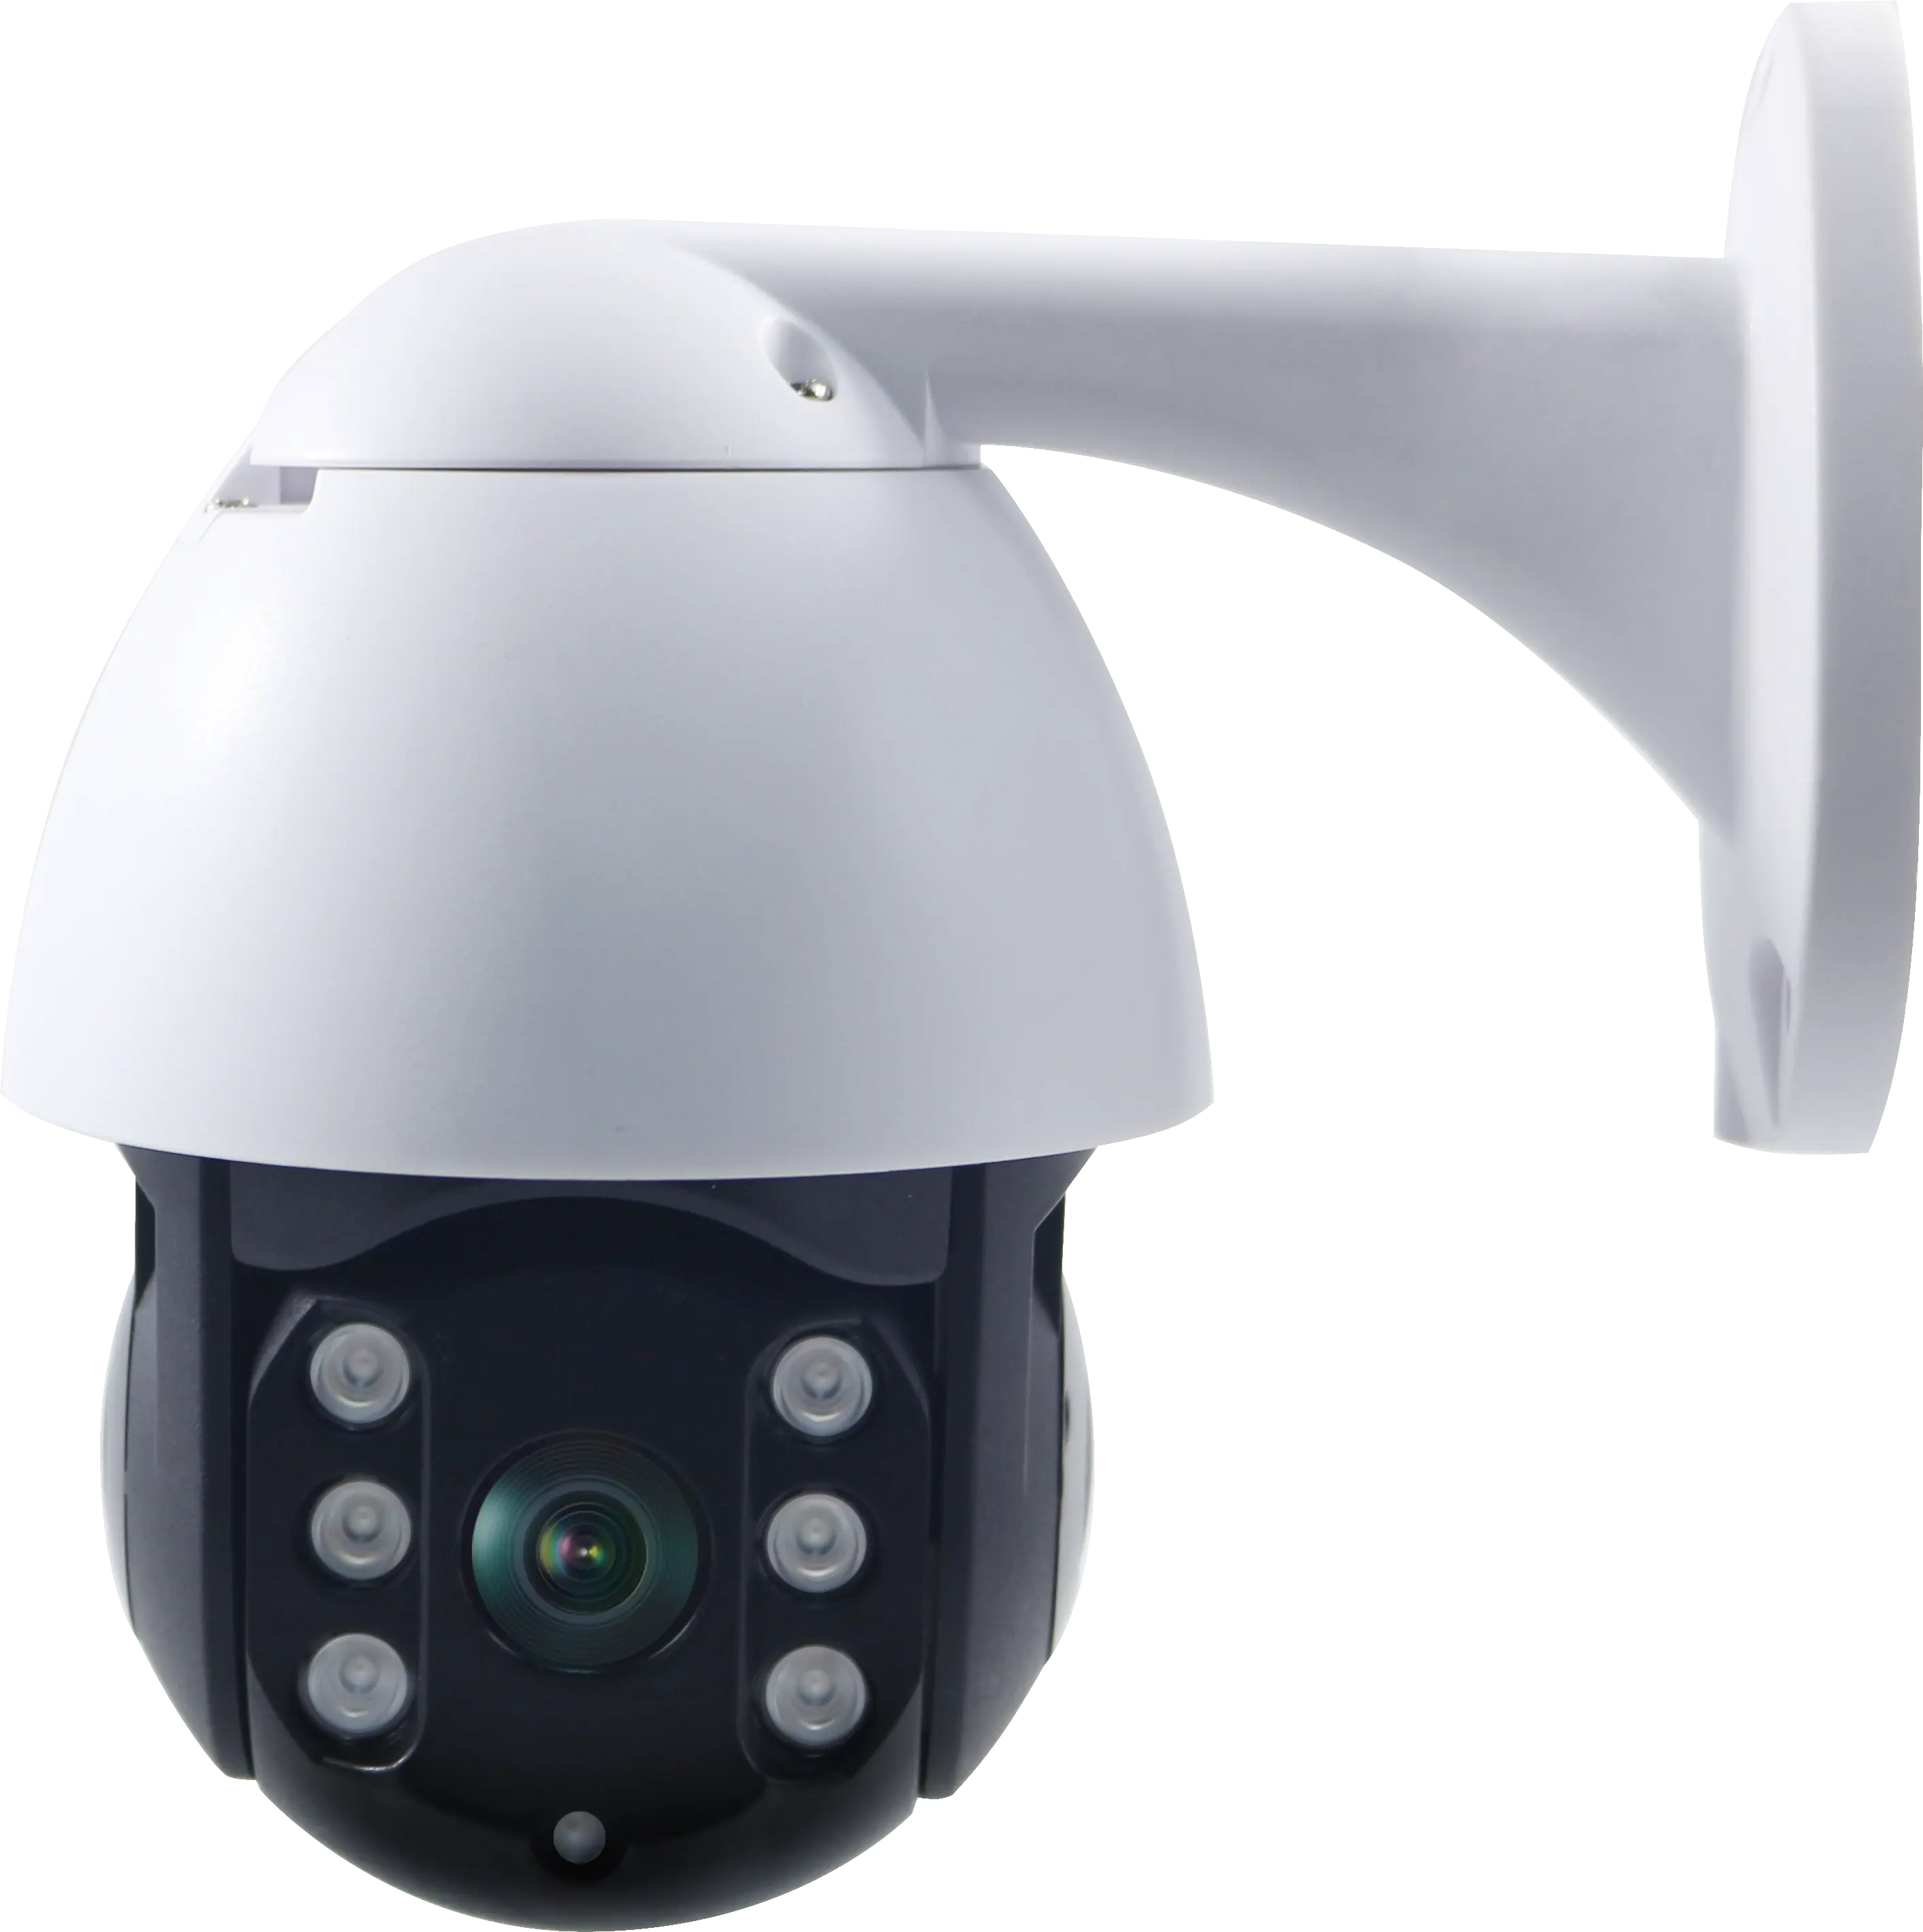 IP66 Waterproof Camera Auto Switch To Day Night Auto Tracking Surveillance 1080p Ptz Video Ip Camera With Wifi